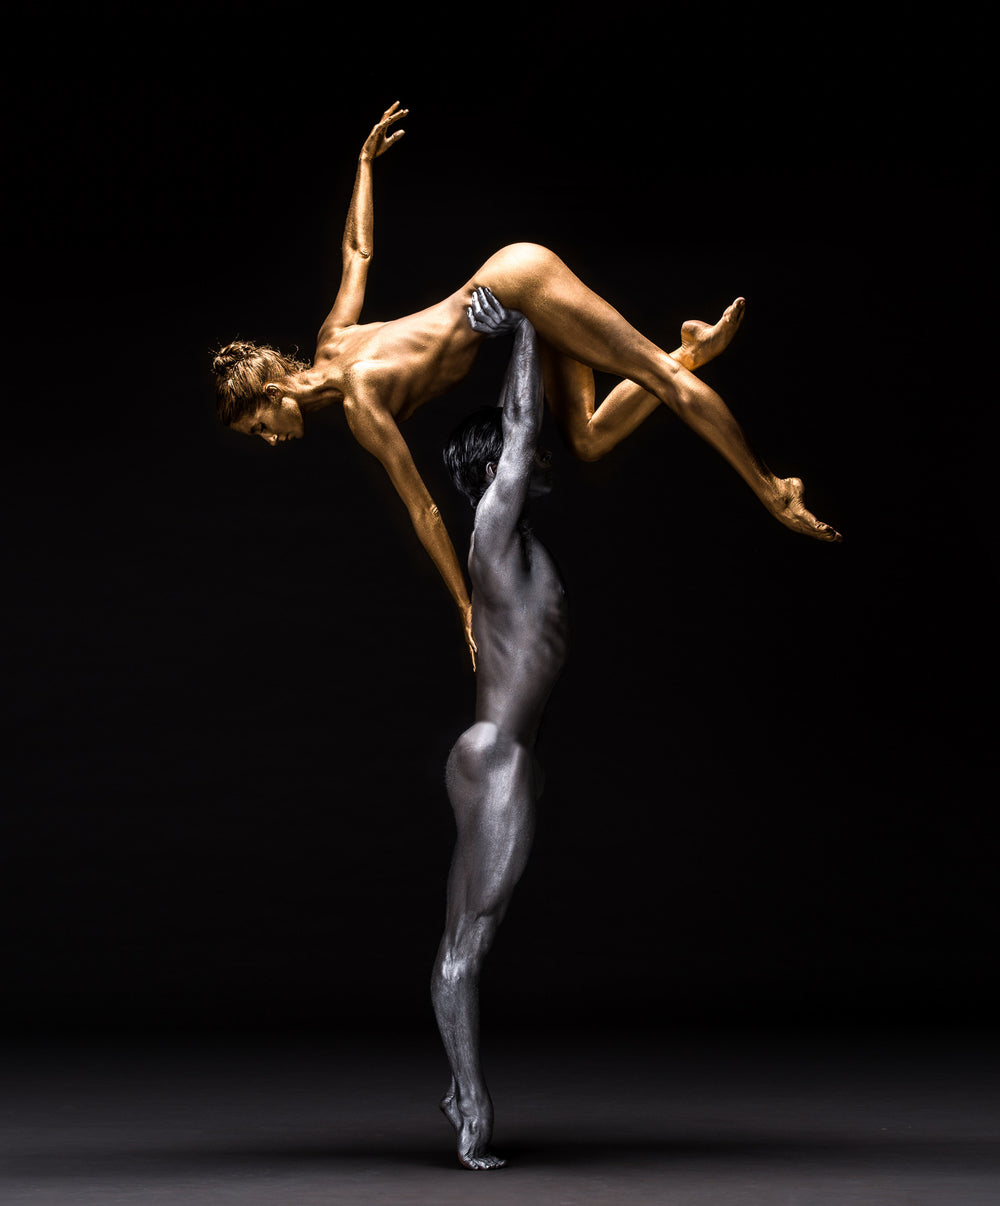 Art Dance Photography Prints - Purchase Online the artwork: Mehron Figures - duet of silver and gold by Francisco Estevez